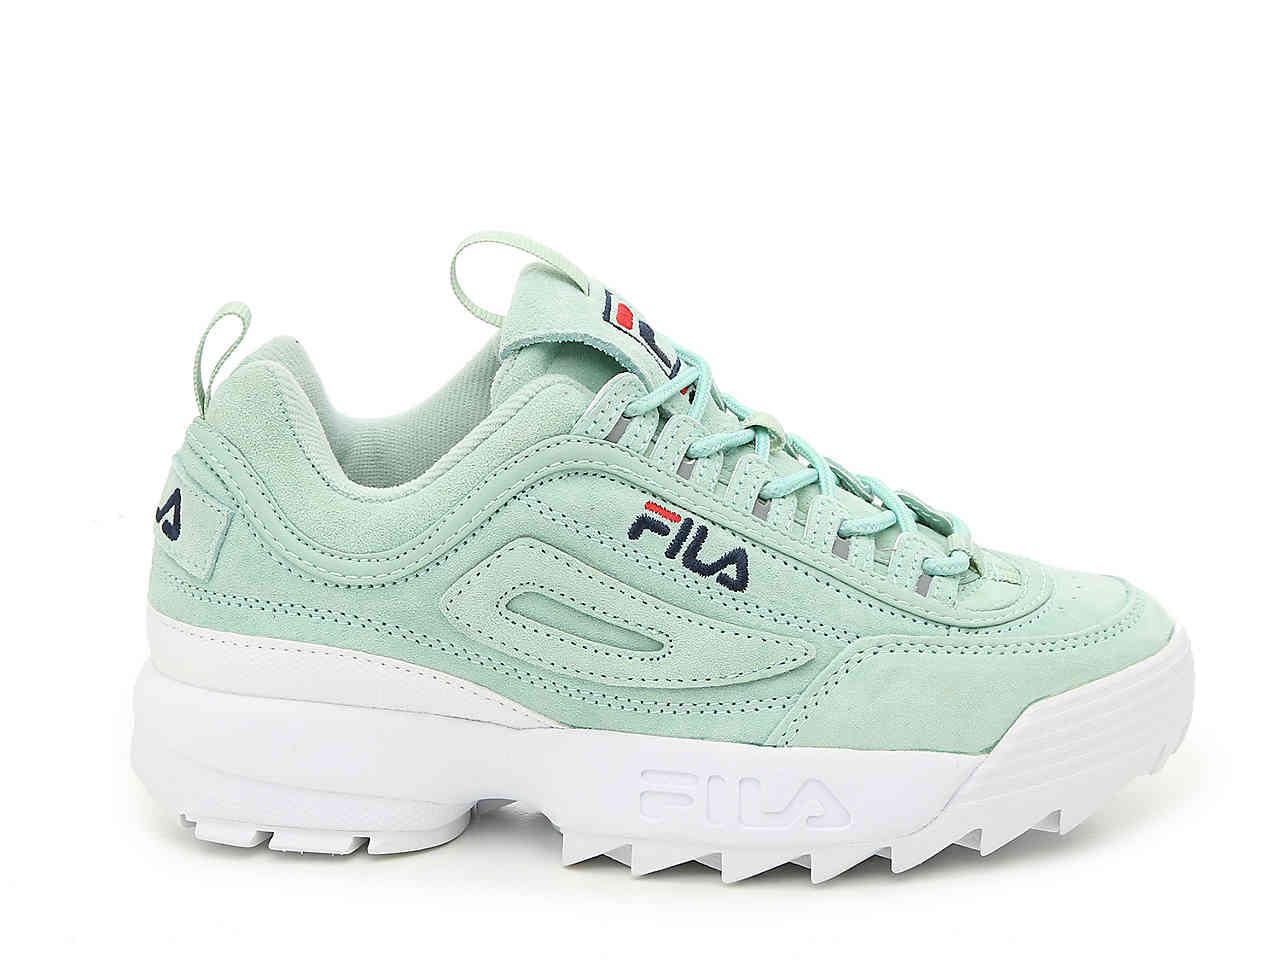 Fila Disruptor Ii Premium Sneaker in Green | Lyst